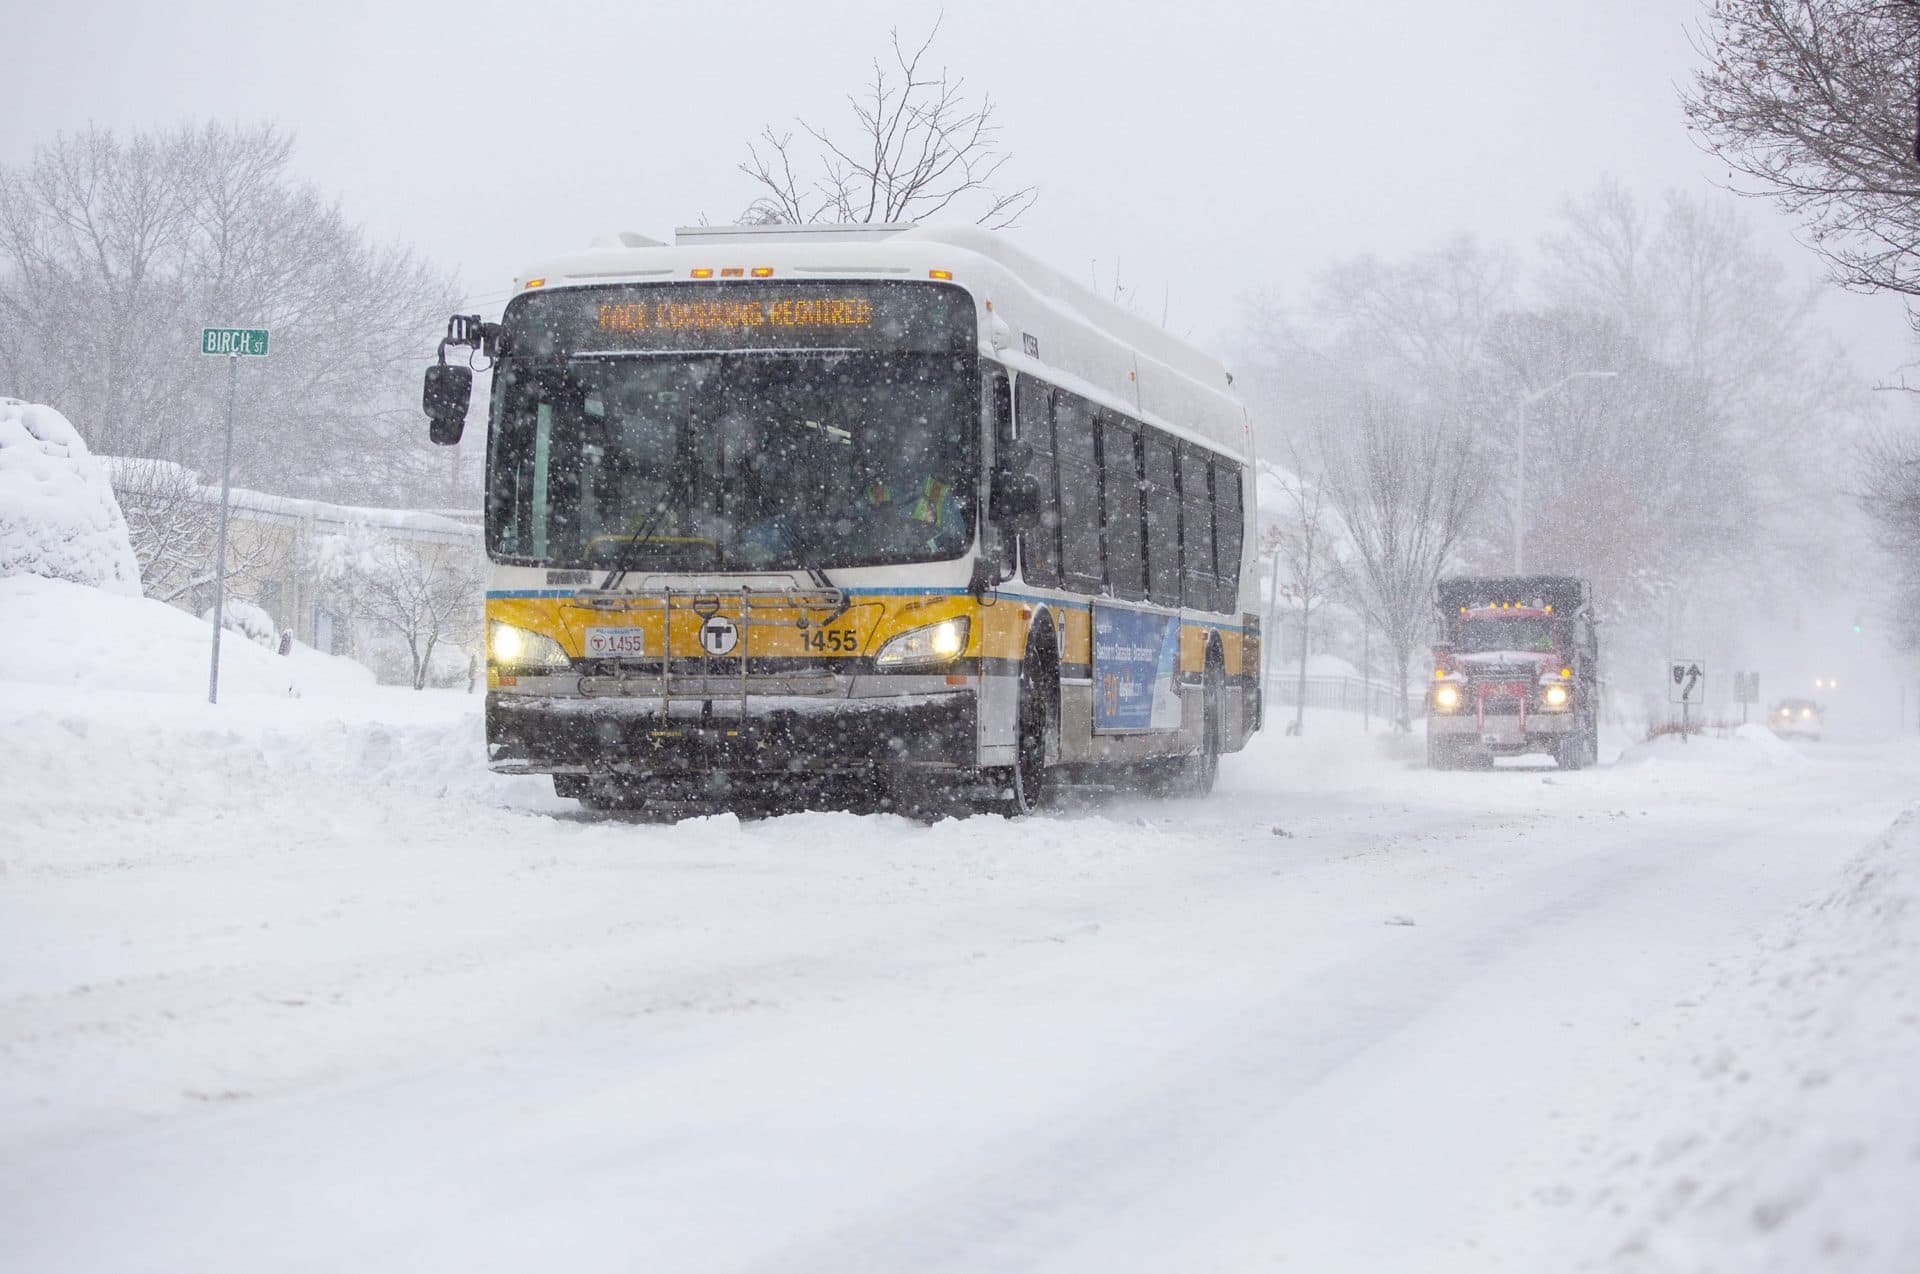 A bus makes its way through the snow storm along Concord Avenue, Cambridge. (Robin Lubbock/WBUR)